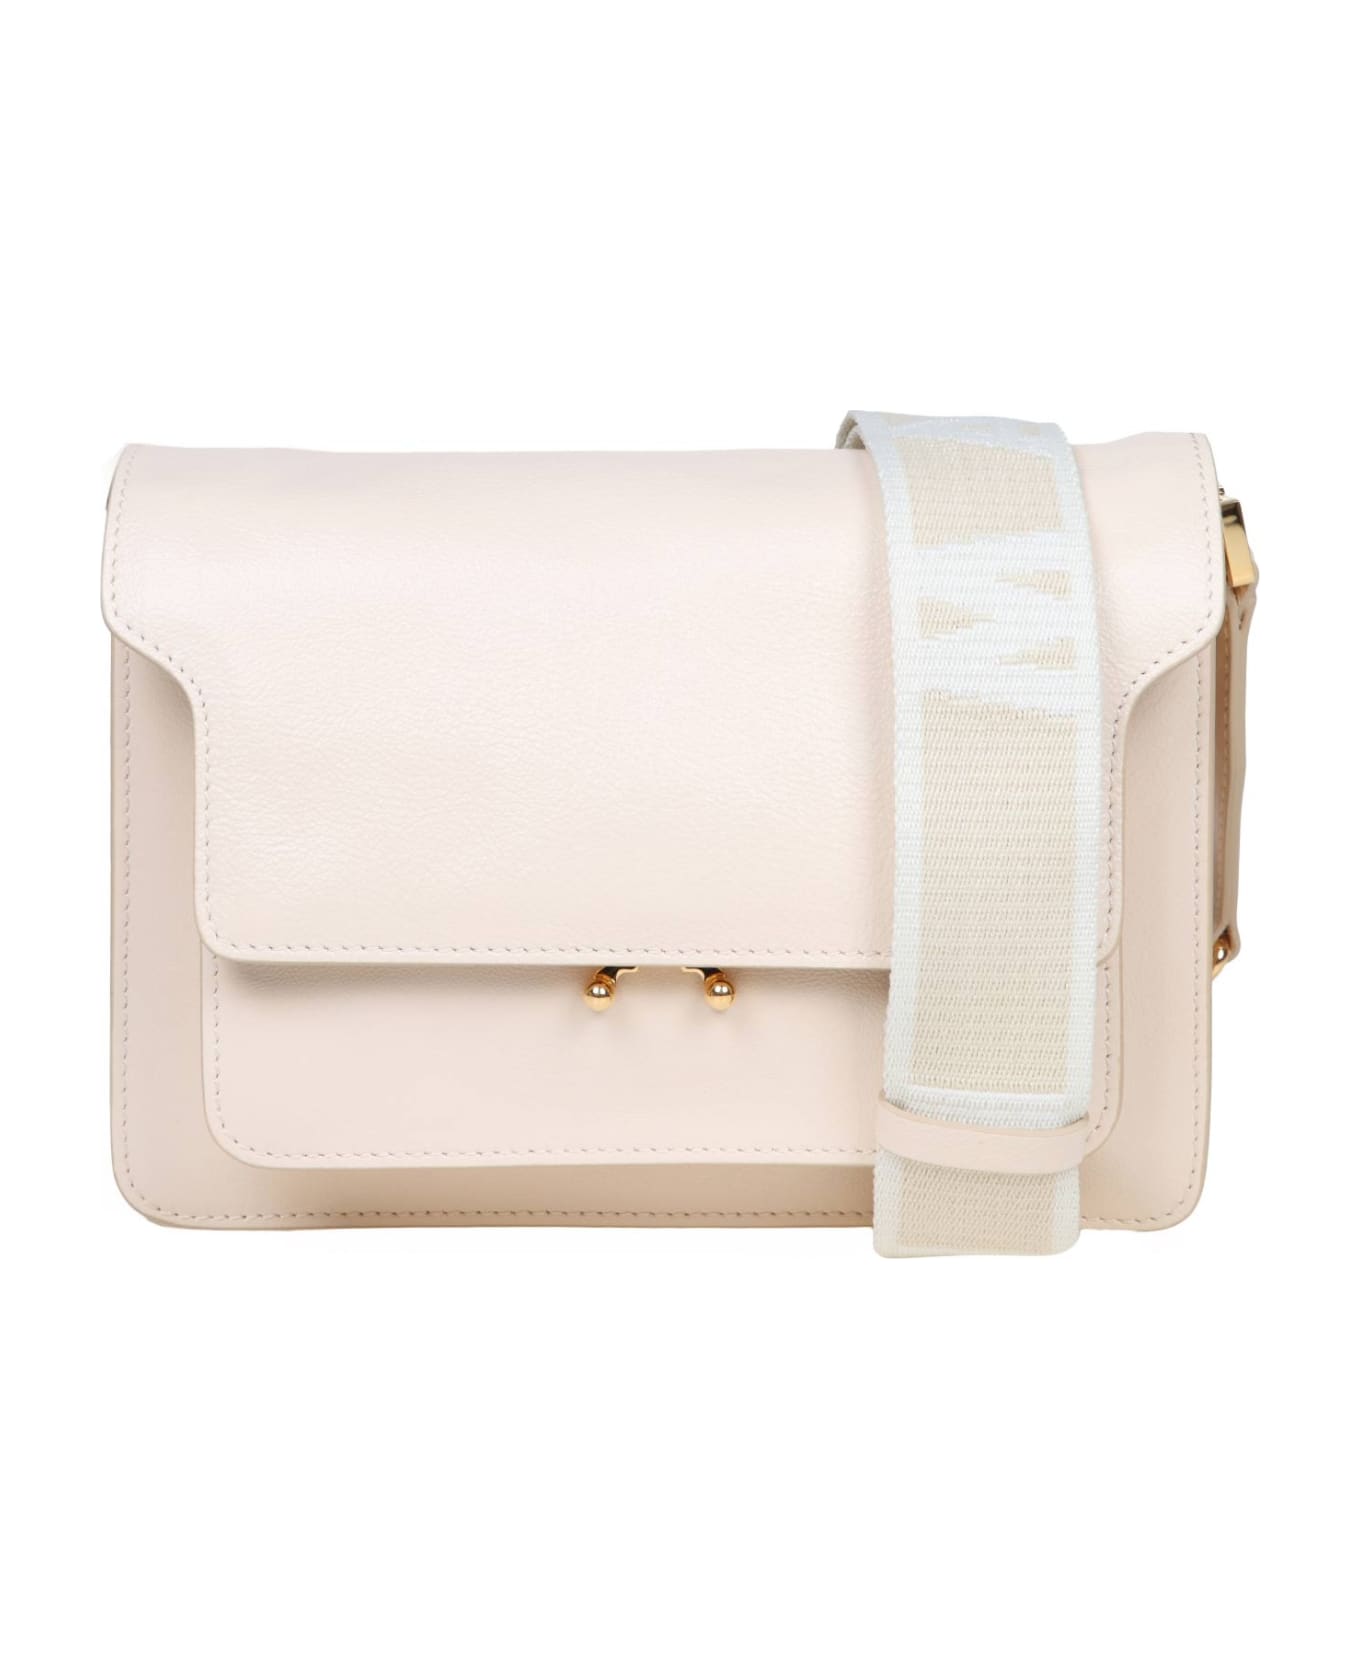 Marni Trunk Soft Shoulder Bag In Cream Color Leather - Cream